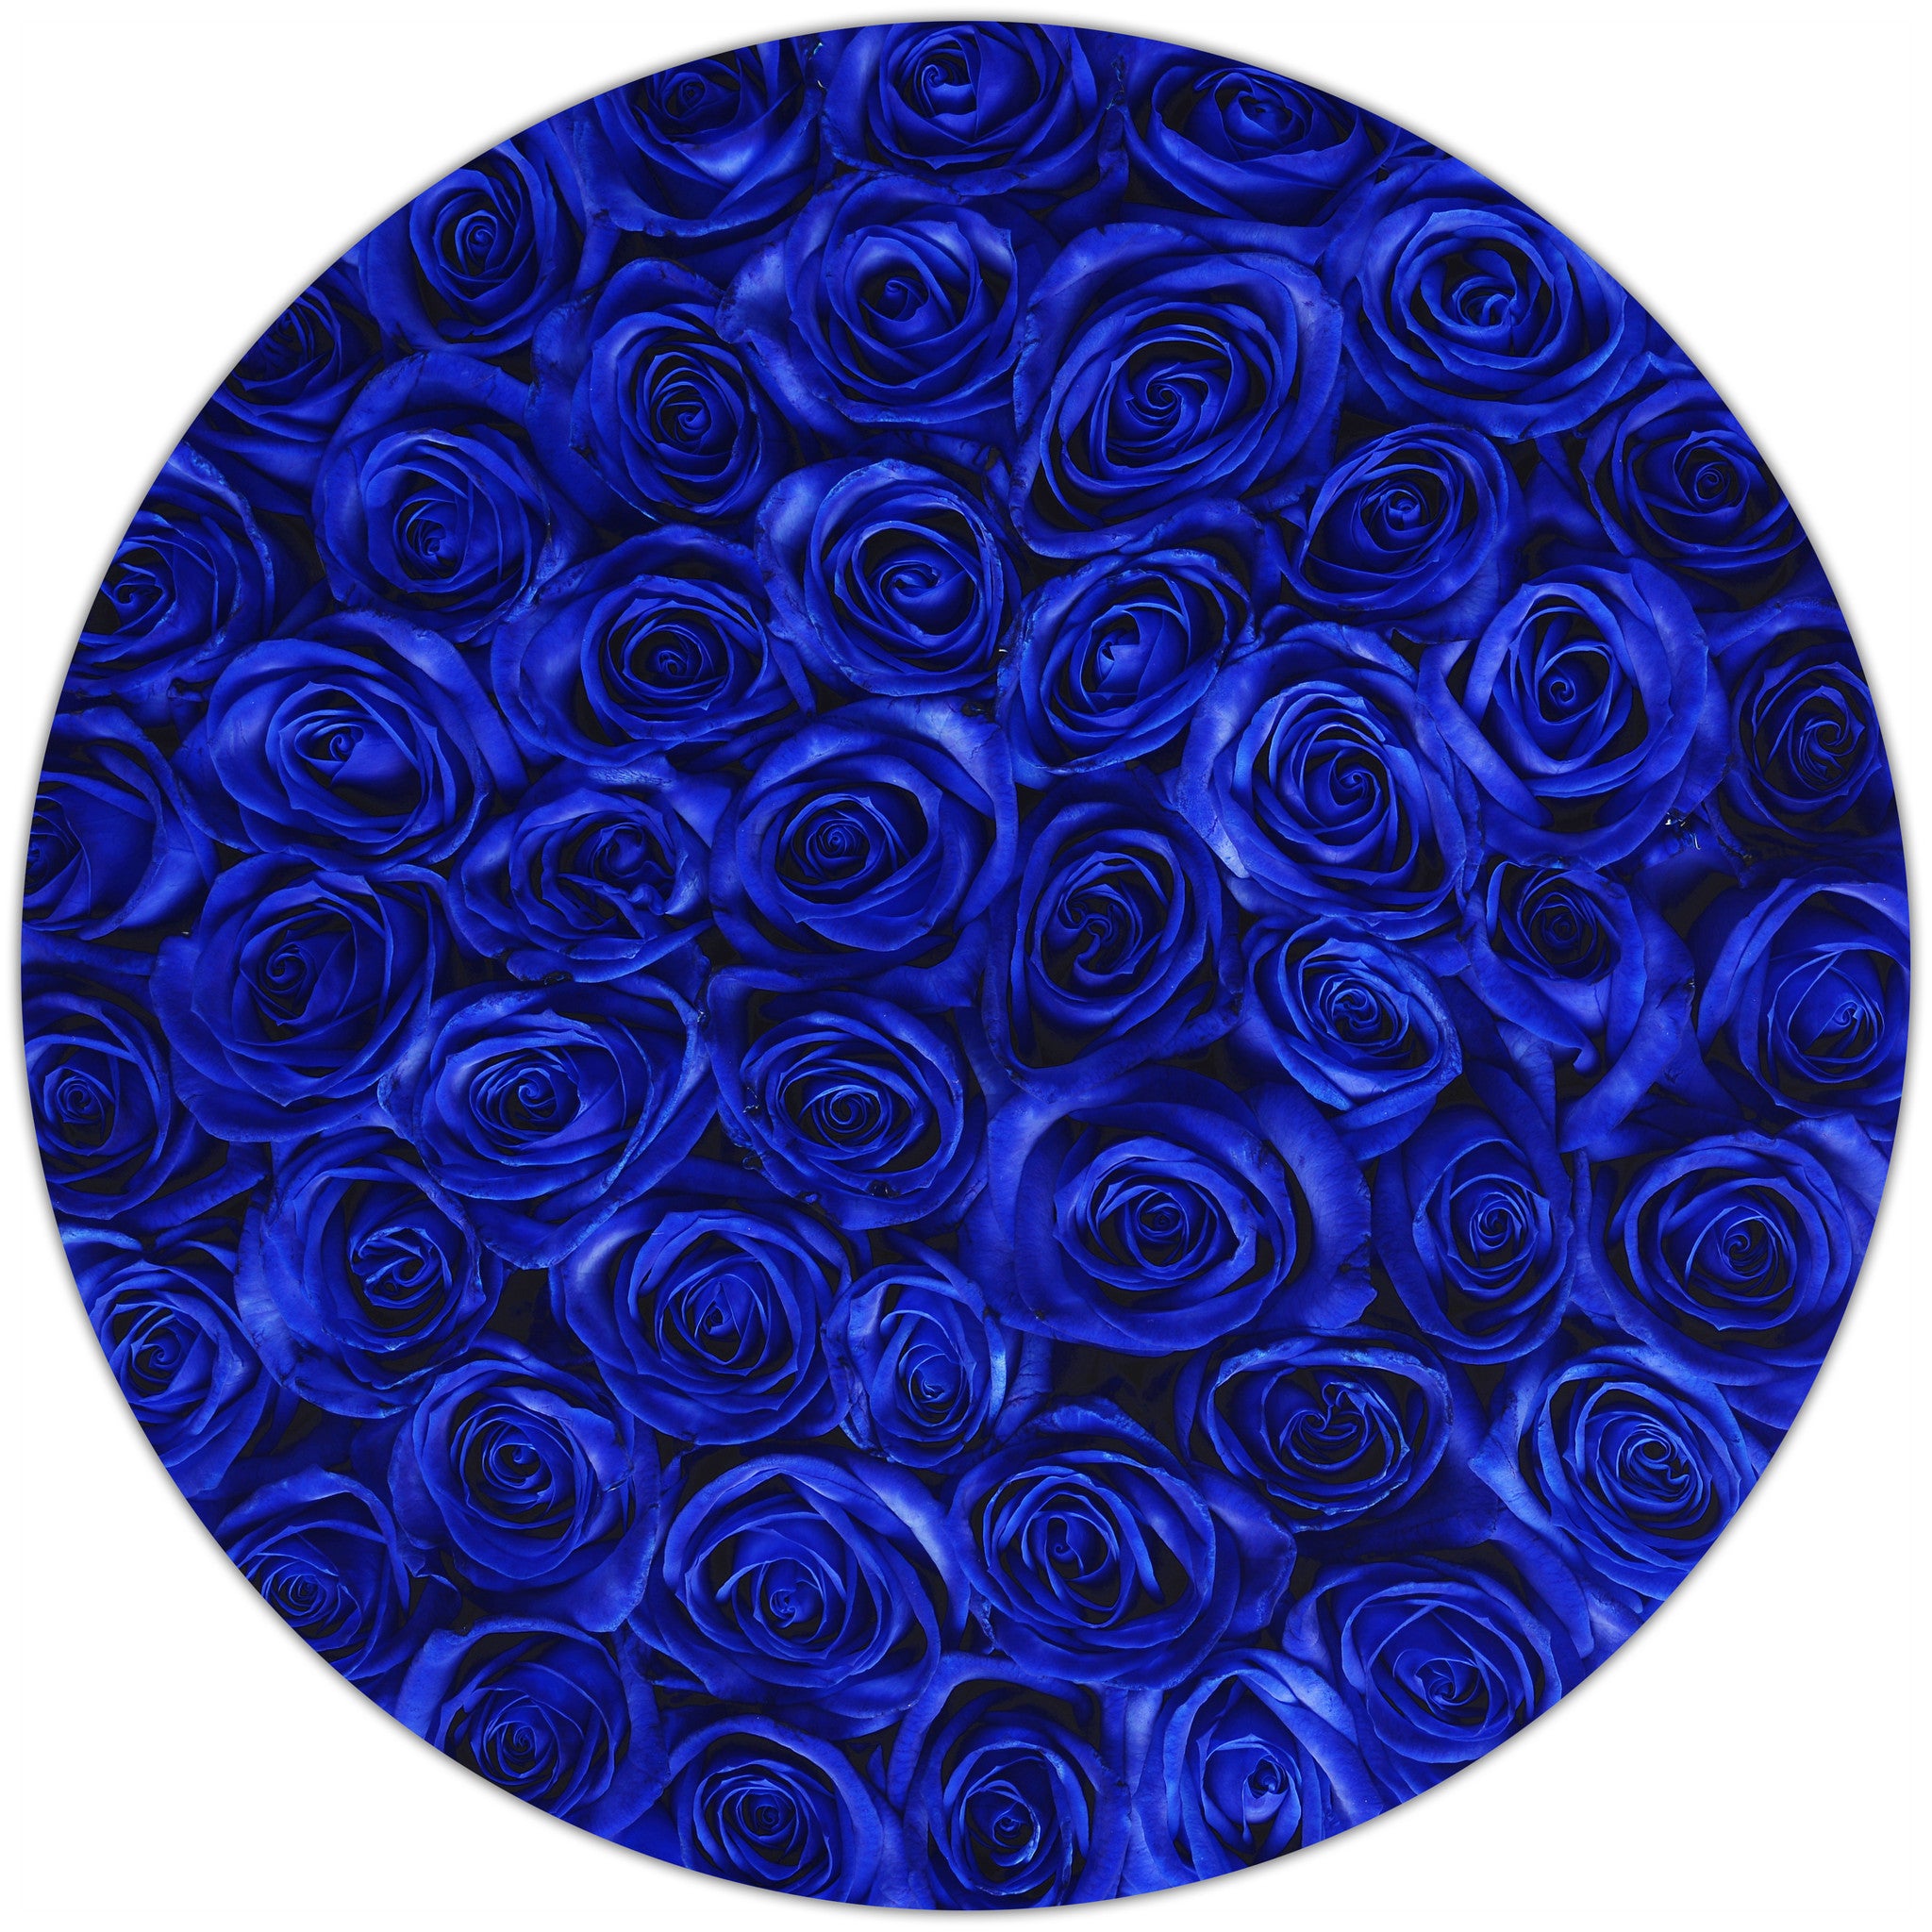 Medium - Blue Roses - White Box - The Million Roses Budapest